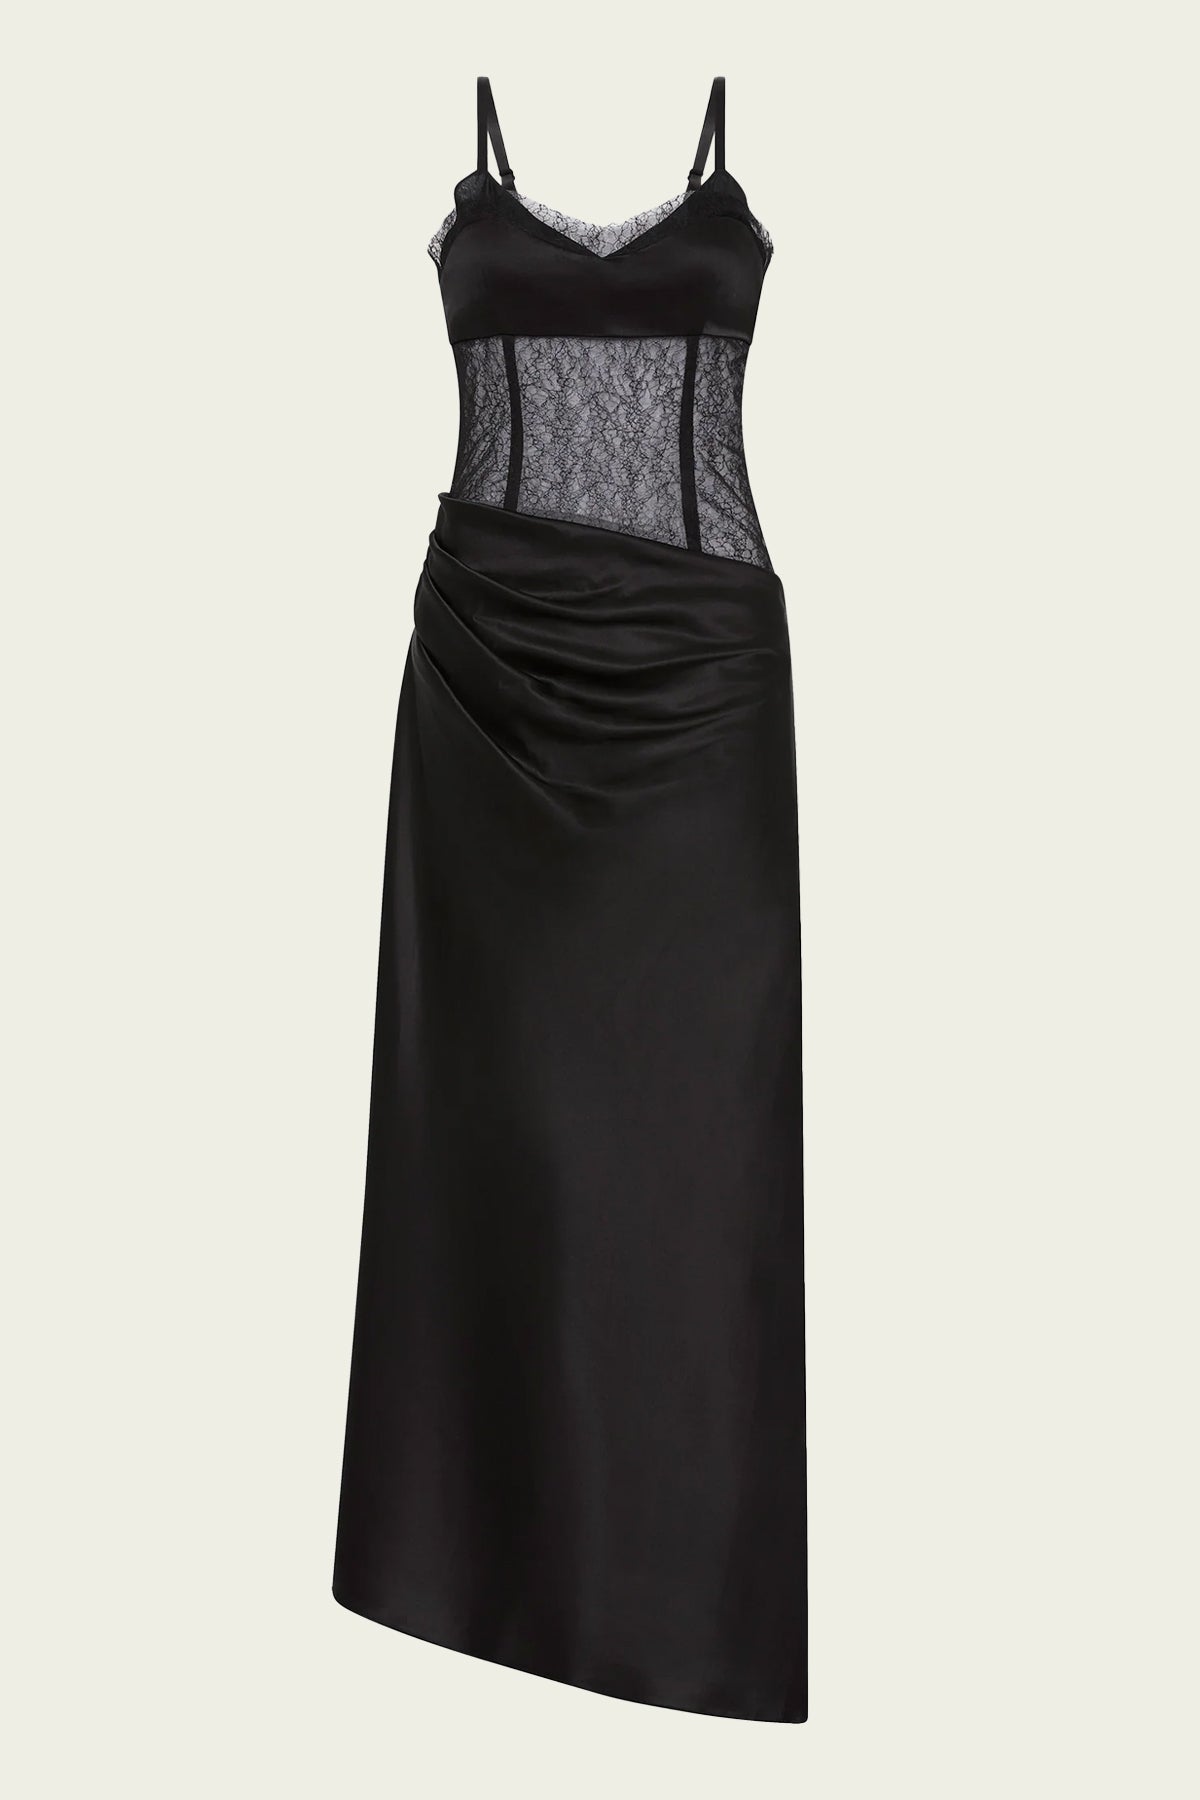 Dunya Draped Gown in Black - shop - olivia.com